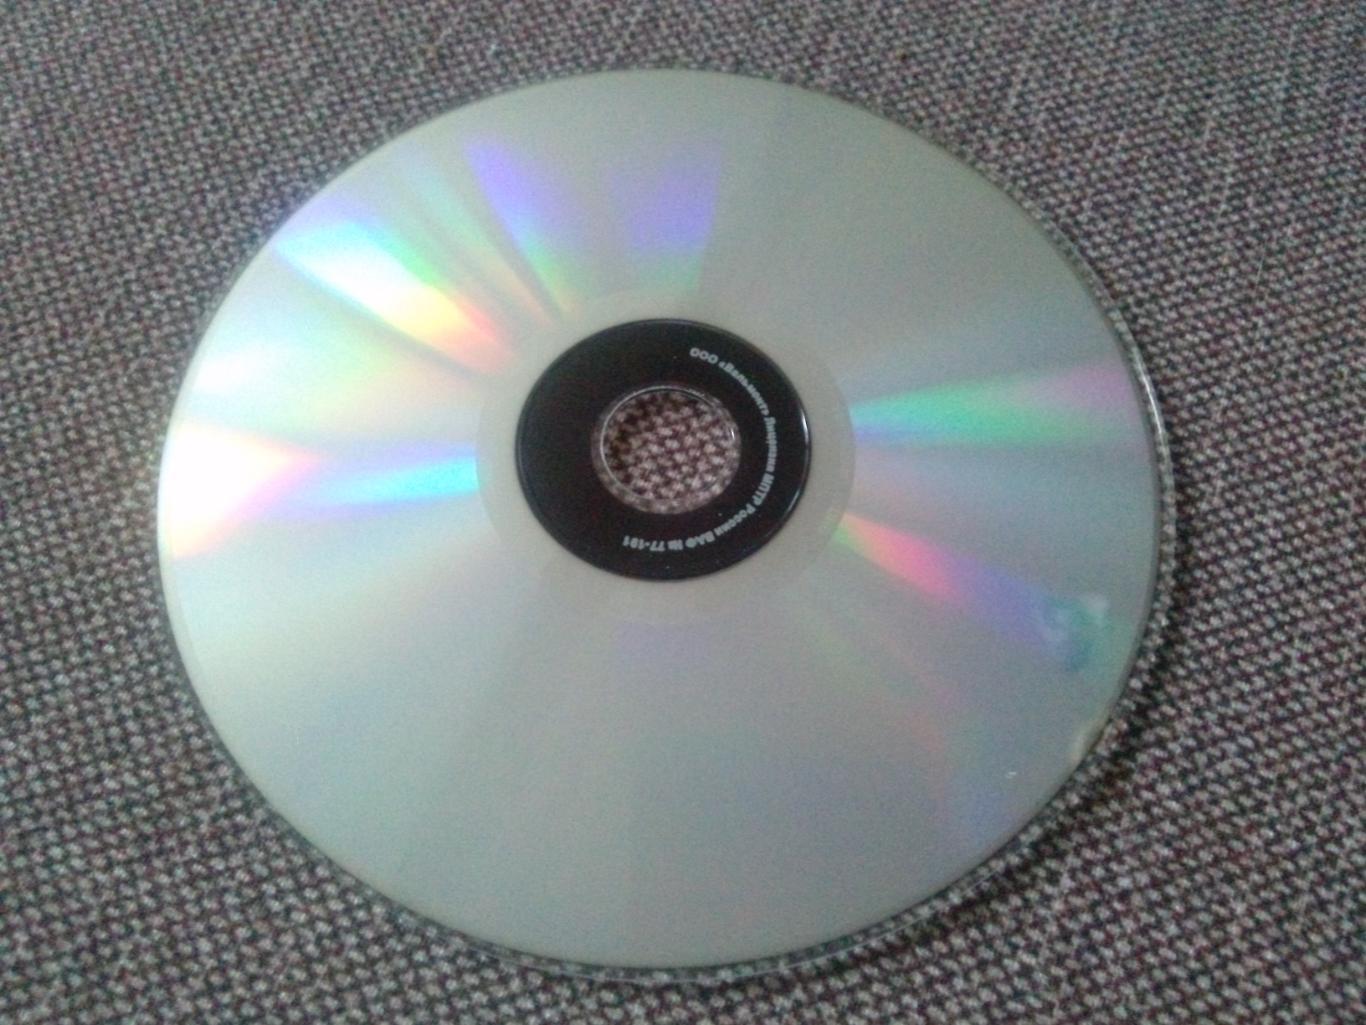 MP - 3 CD диск : группа Axel Rudi Pell 9 альбомов Hard & Heavy Рок - музыка 3